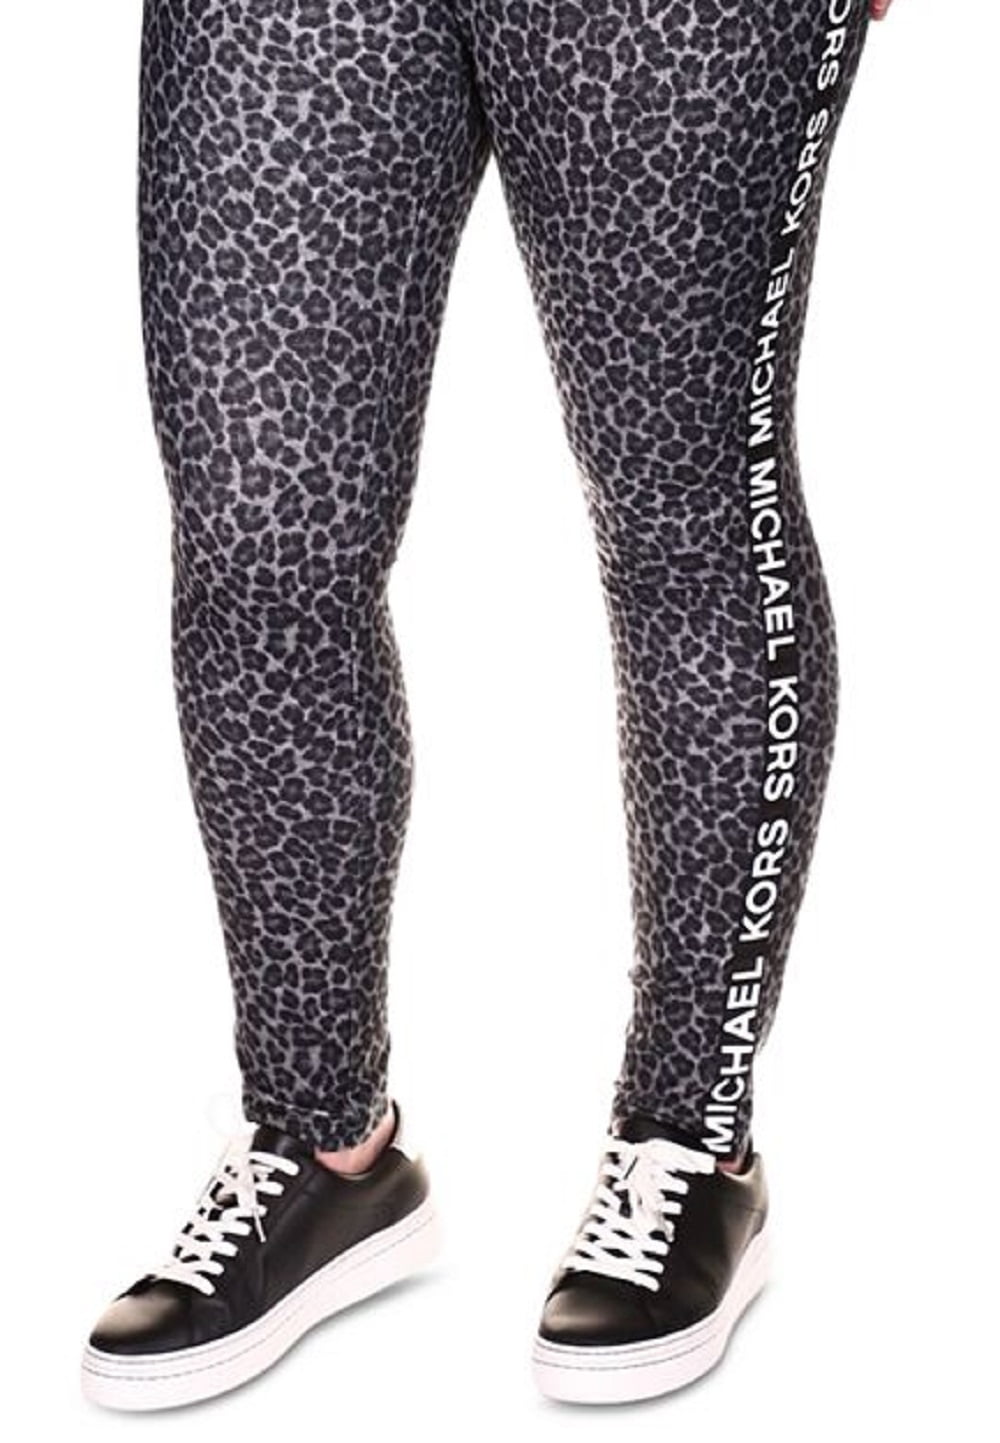 Michael Kors Pull-on Cheetah Animal Print w/ pockets Pants Leggings Size S  🐆